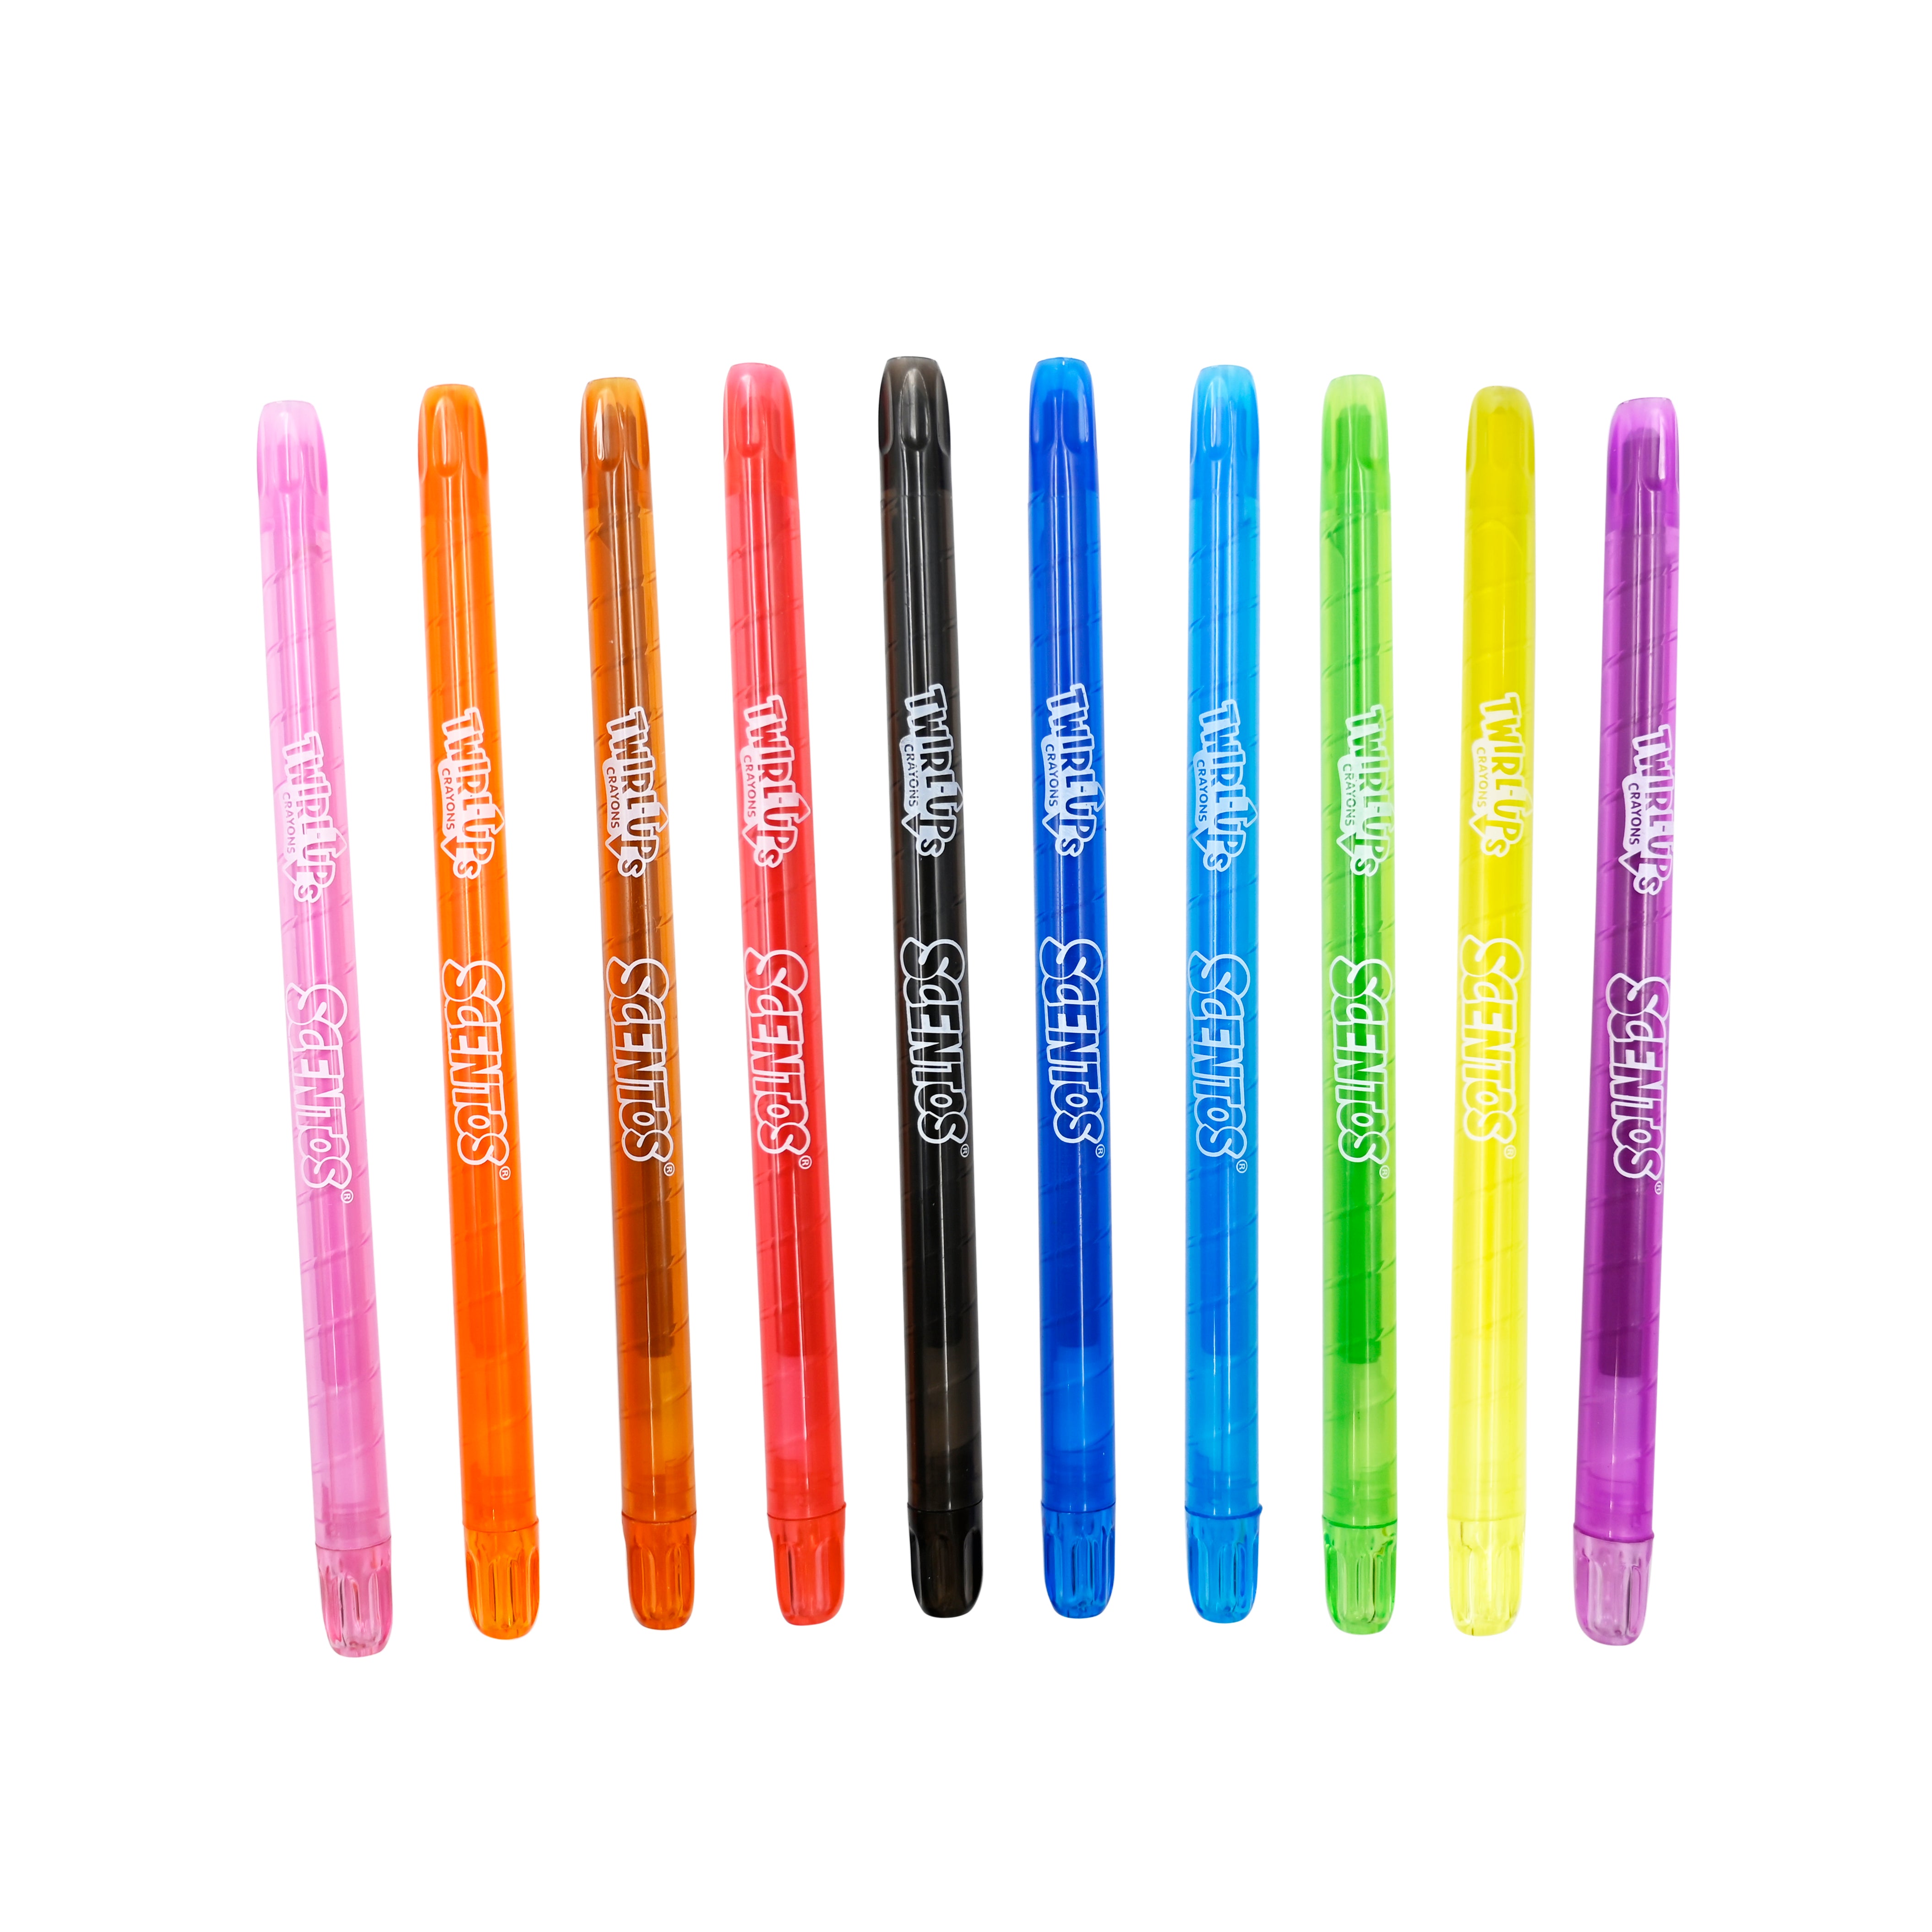 10 Scentos Twirl-Ups Crayons